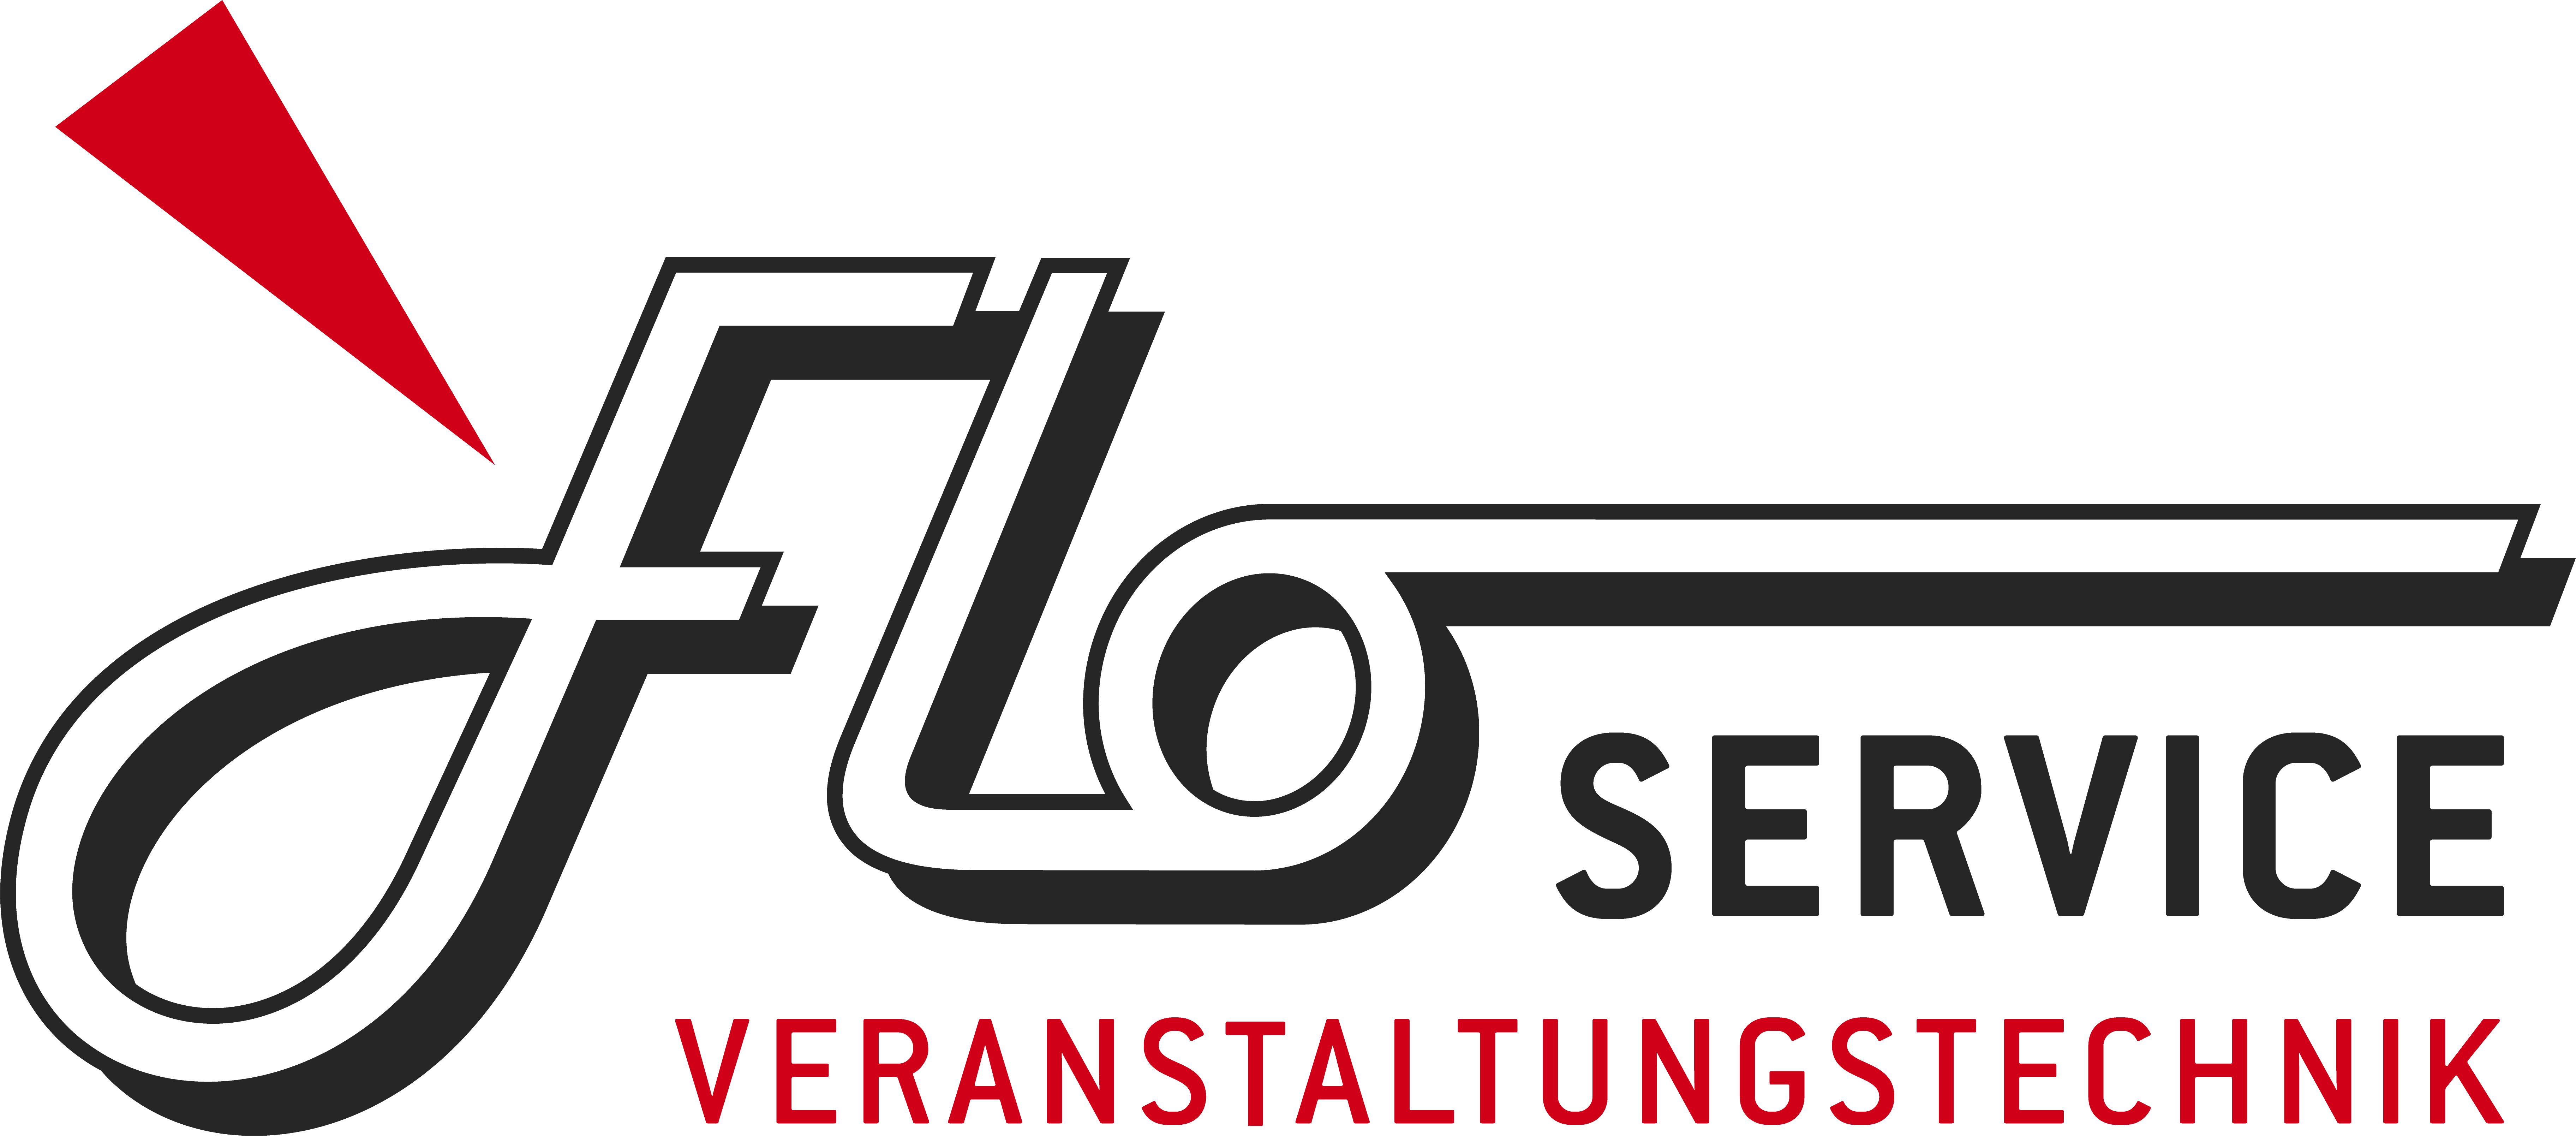 floservice-logo-7297x3217